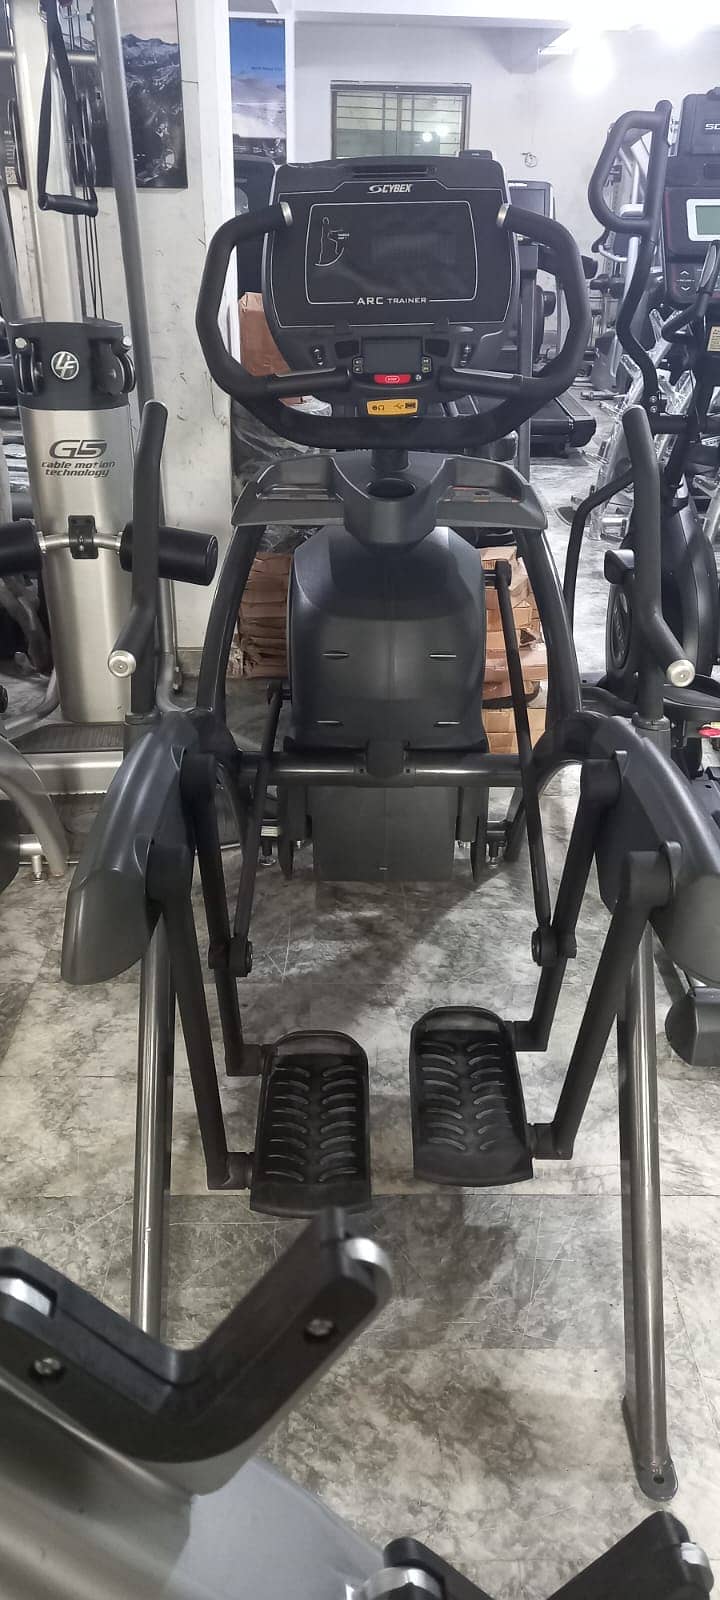 Treadmill | elliptical CYBEX ARC TRAINER USA Import | cycle spin bike 2